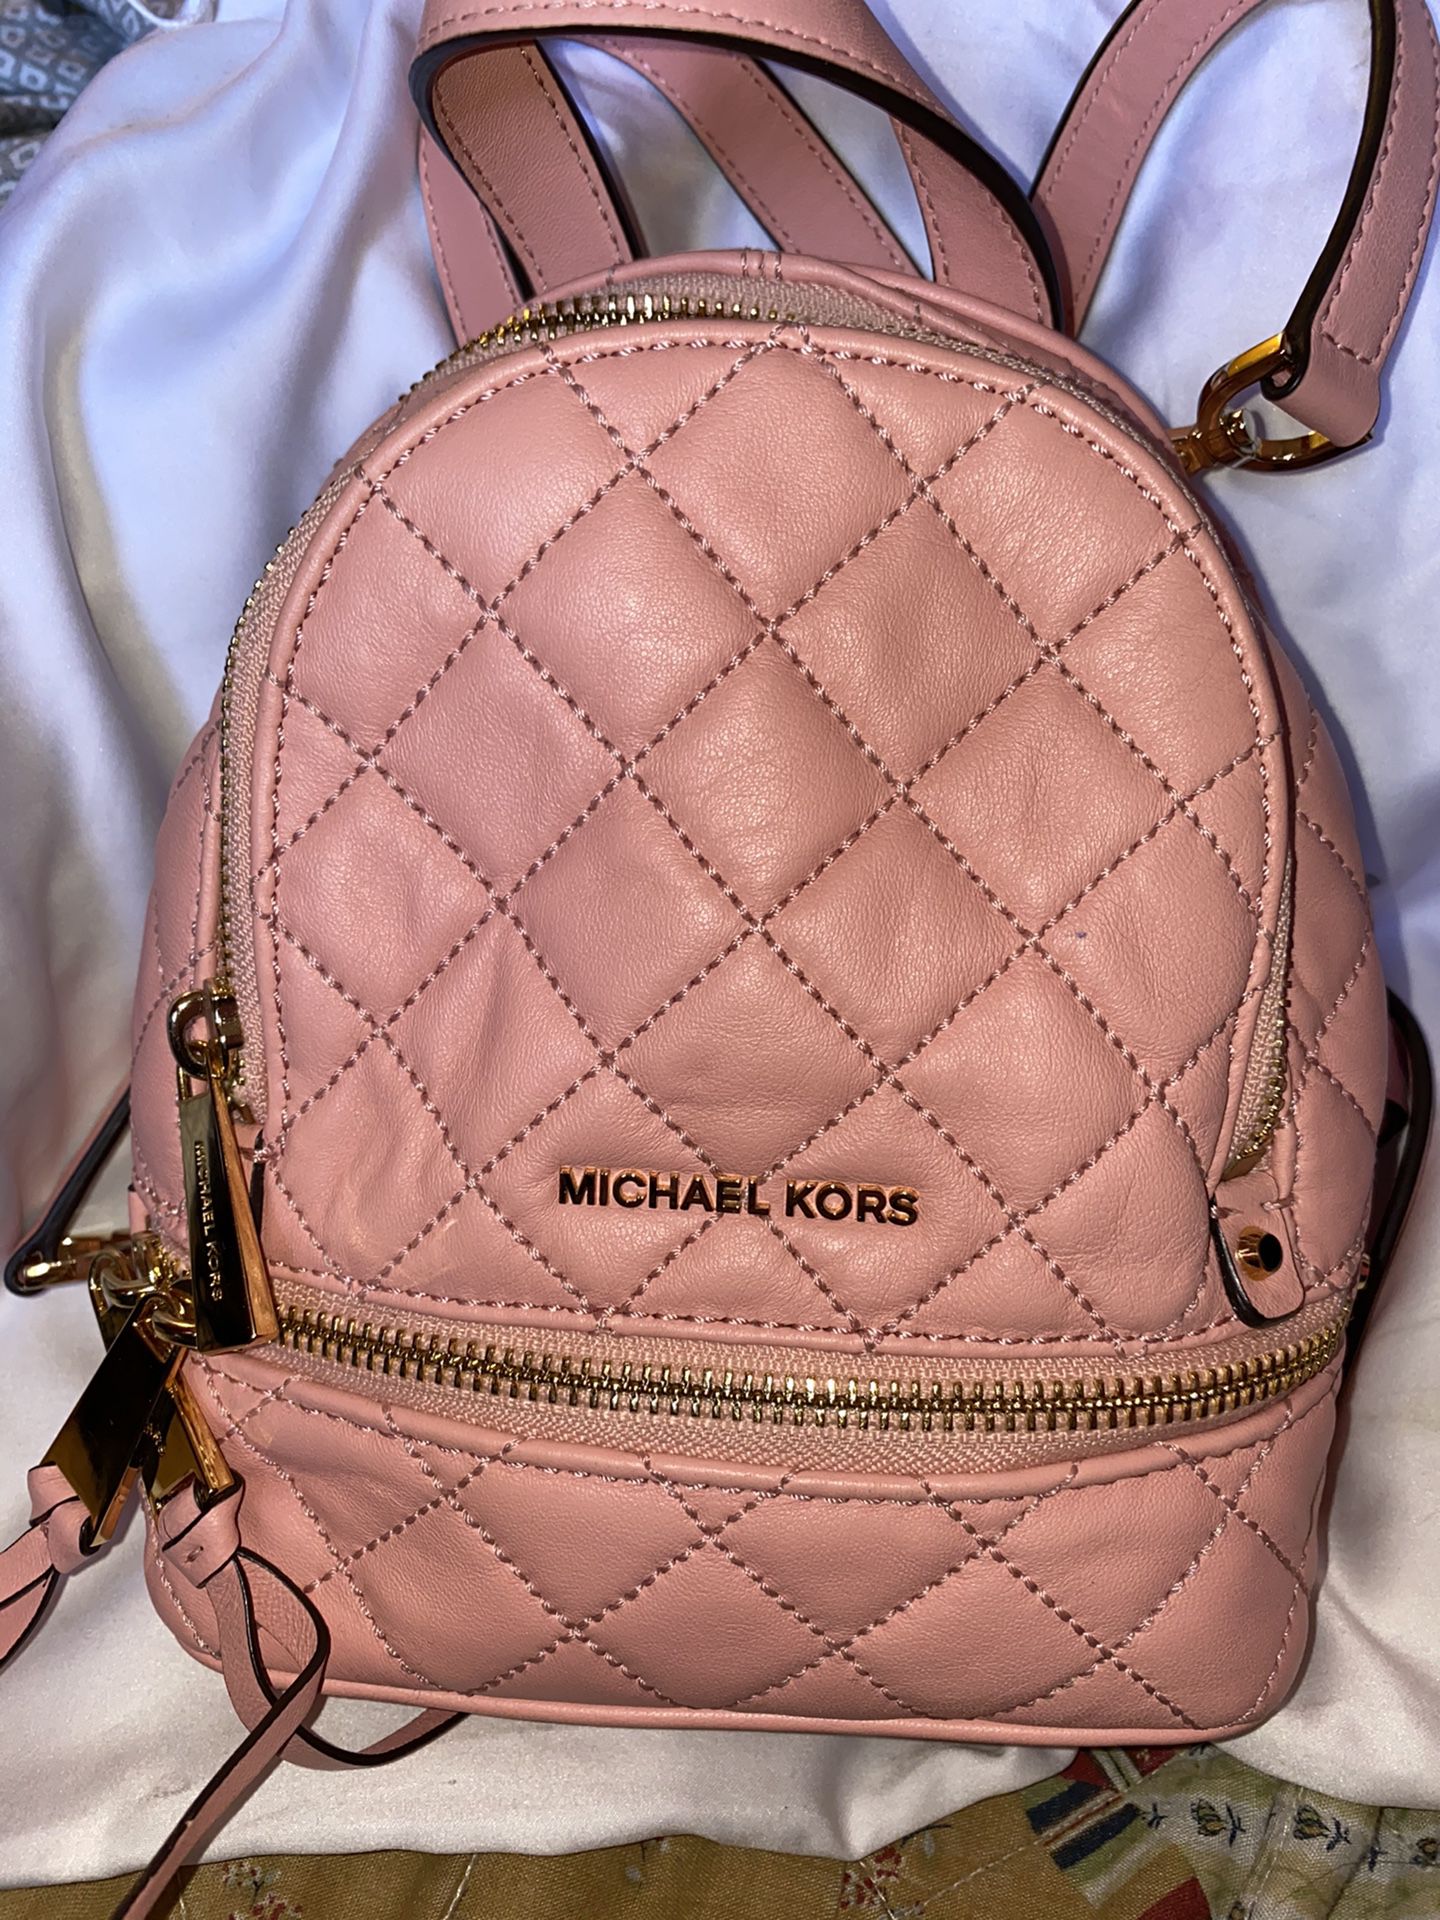 Michael Kors pink leather mini backpack